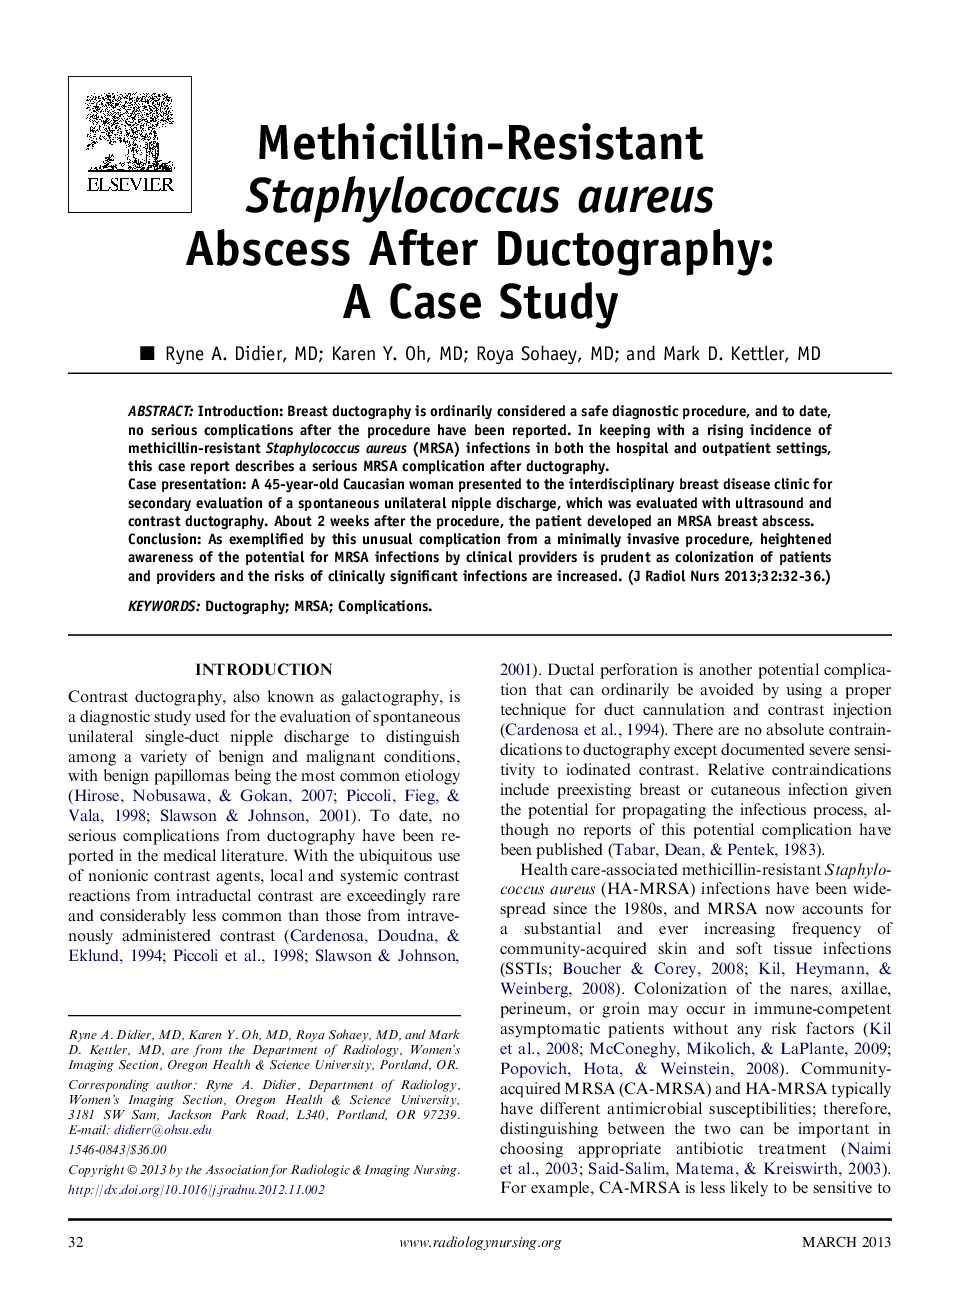 Methicillin-Resistant Staphylococcus aureus Abscess After Ductography: A Case Study